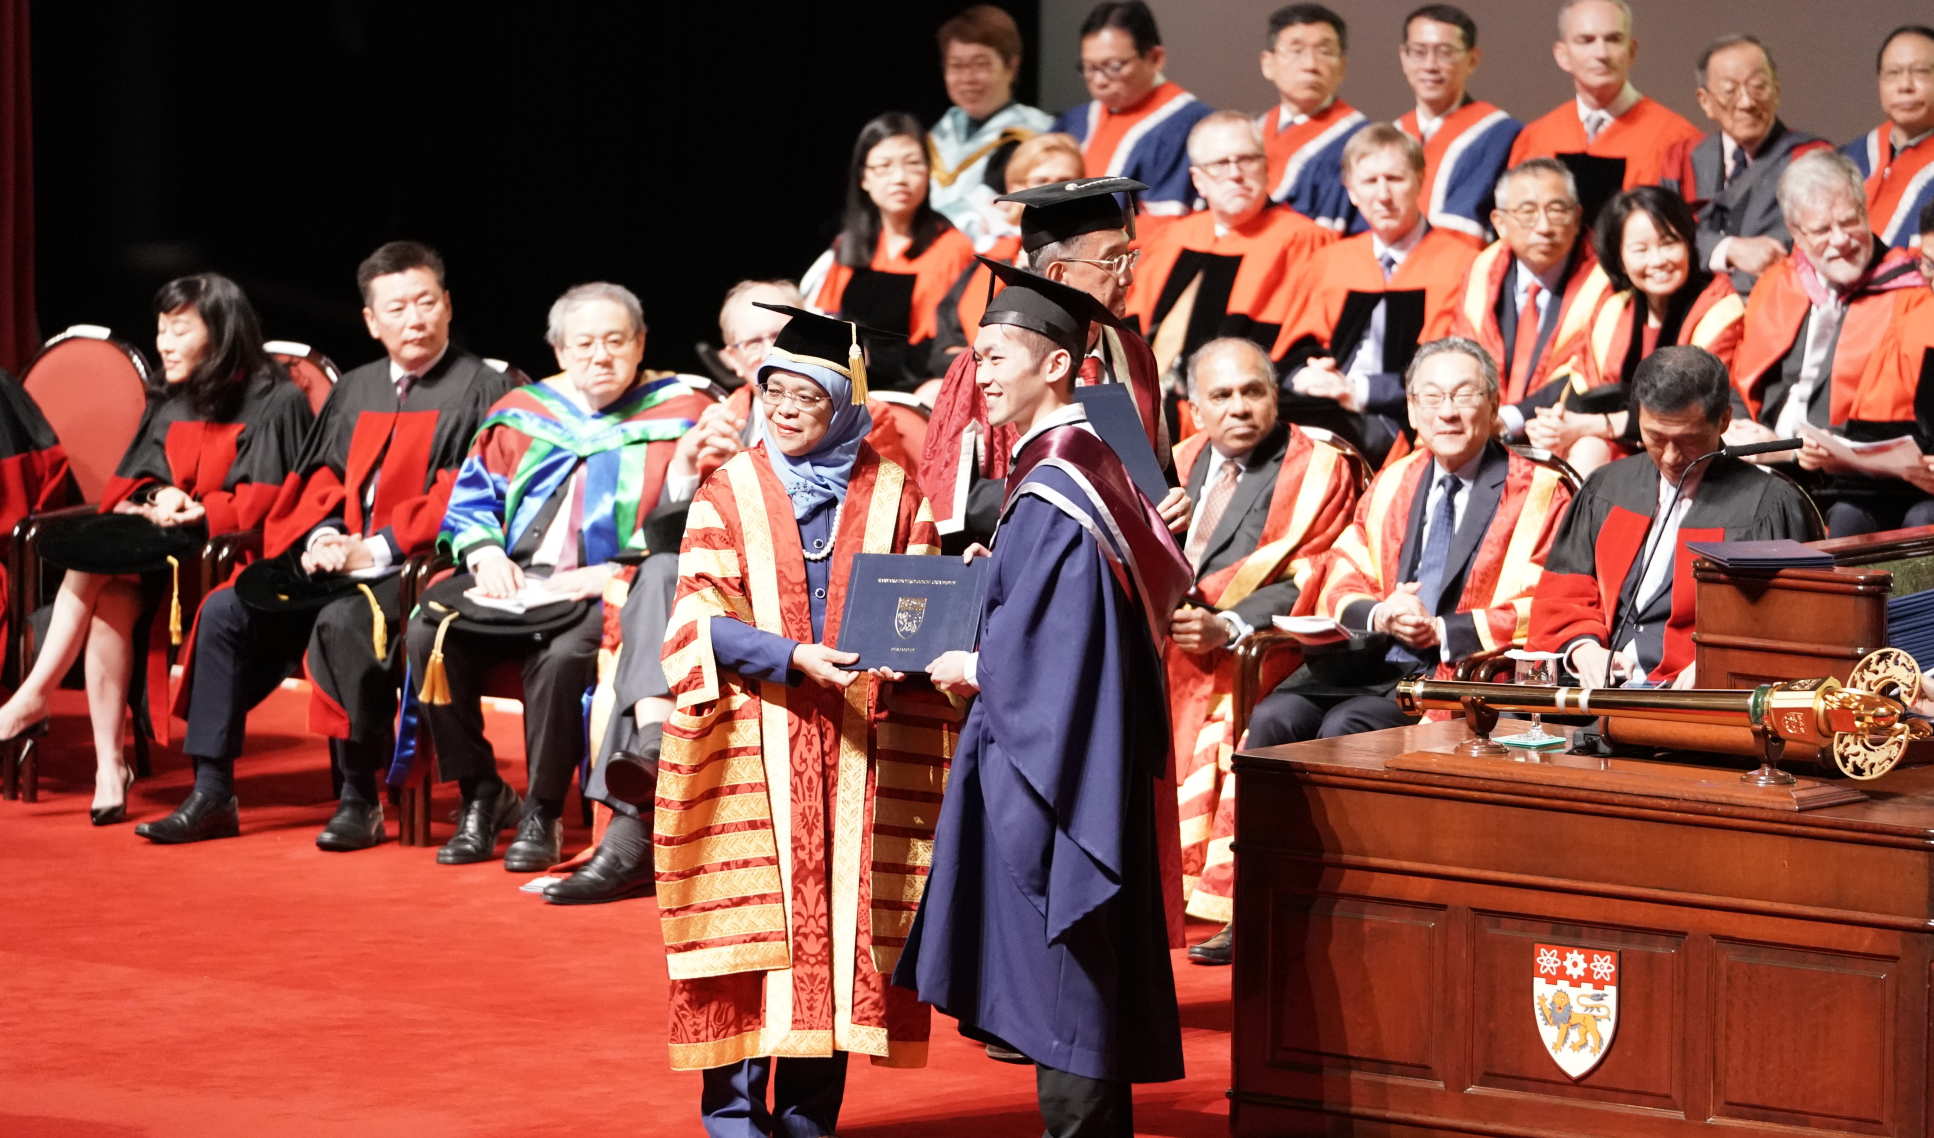 President Yacob confers a degree